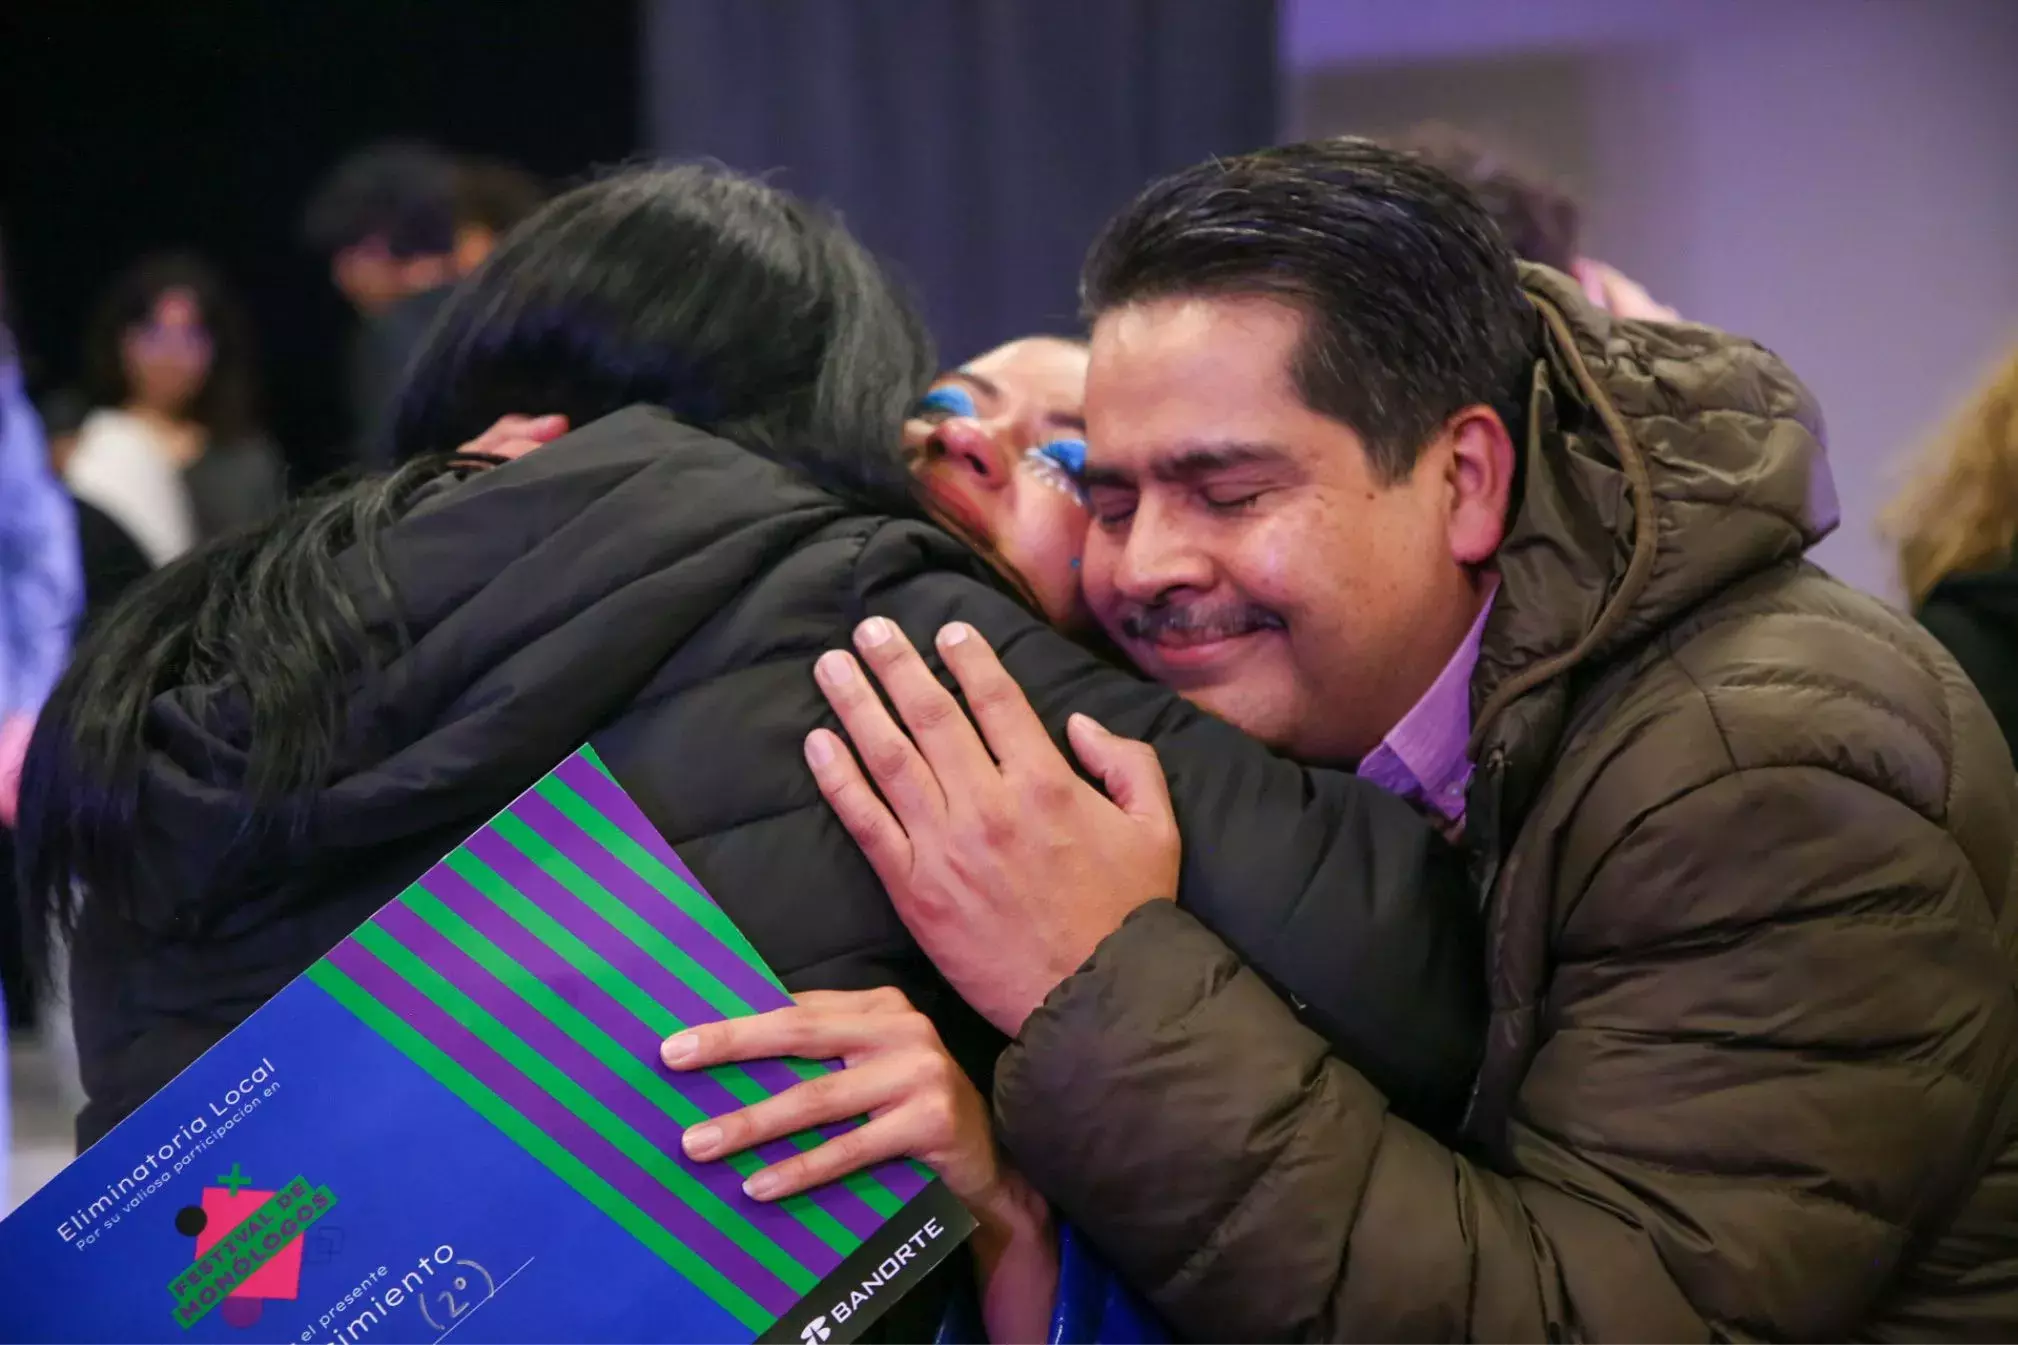 Padres de familia abrazando a su hija